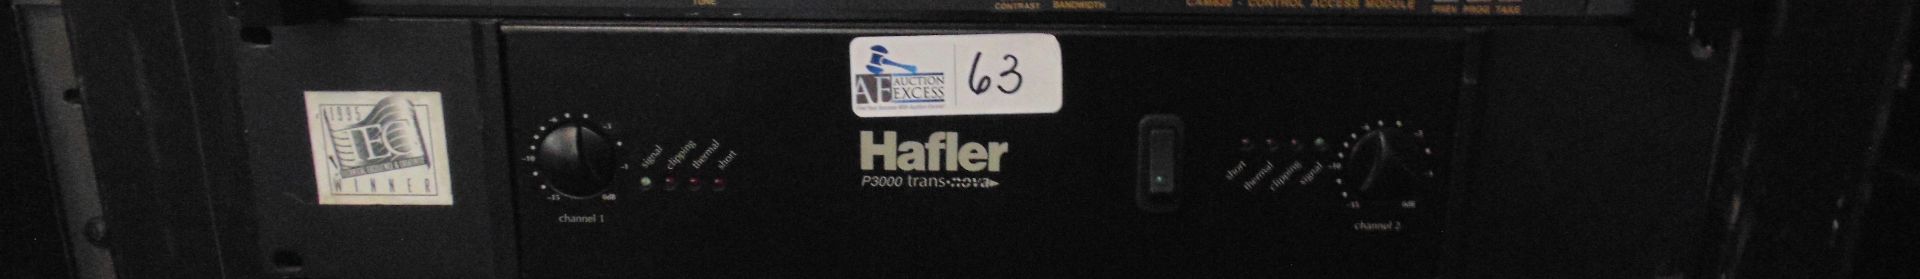 HAFLER P3000